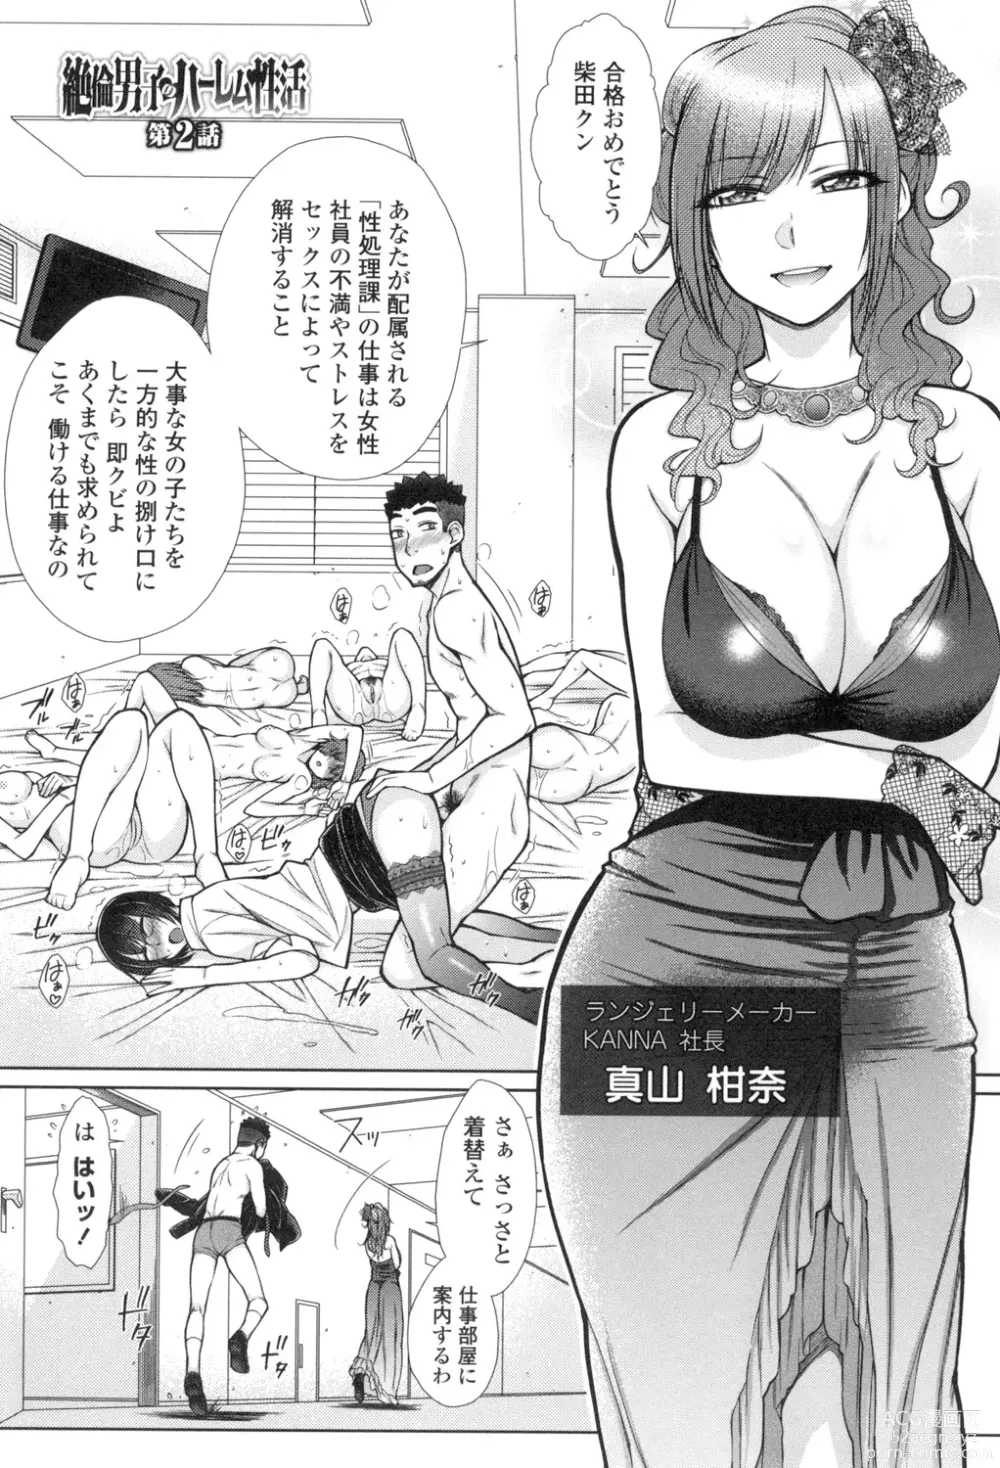 Page 24 of manga Kochira Joshi Shain Senyou Seishorika - Sex Industry Division for Womens Employees Dedicated